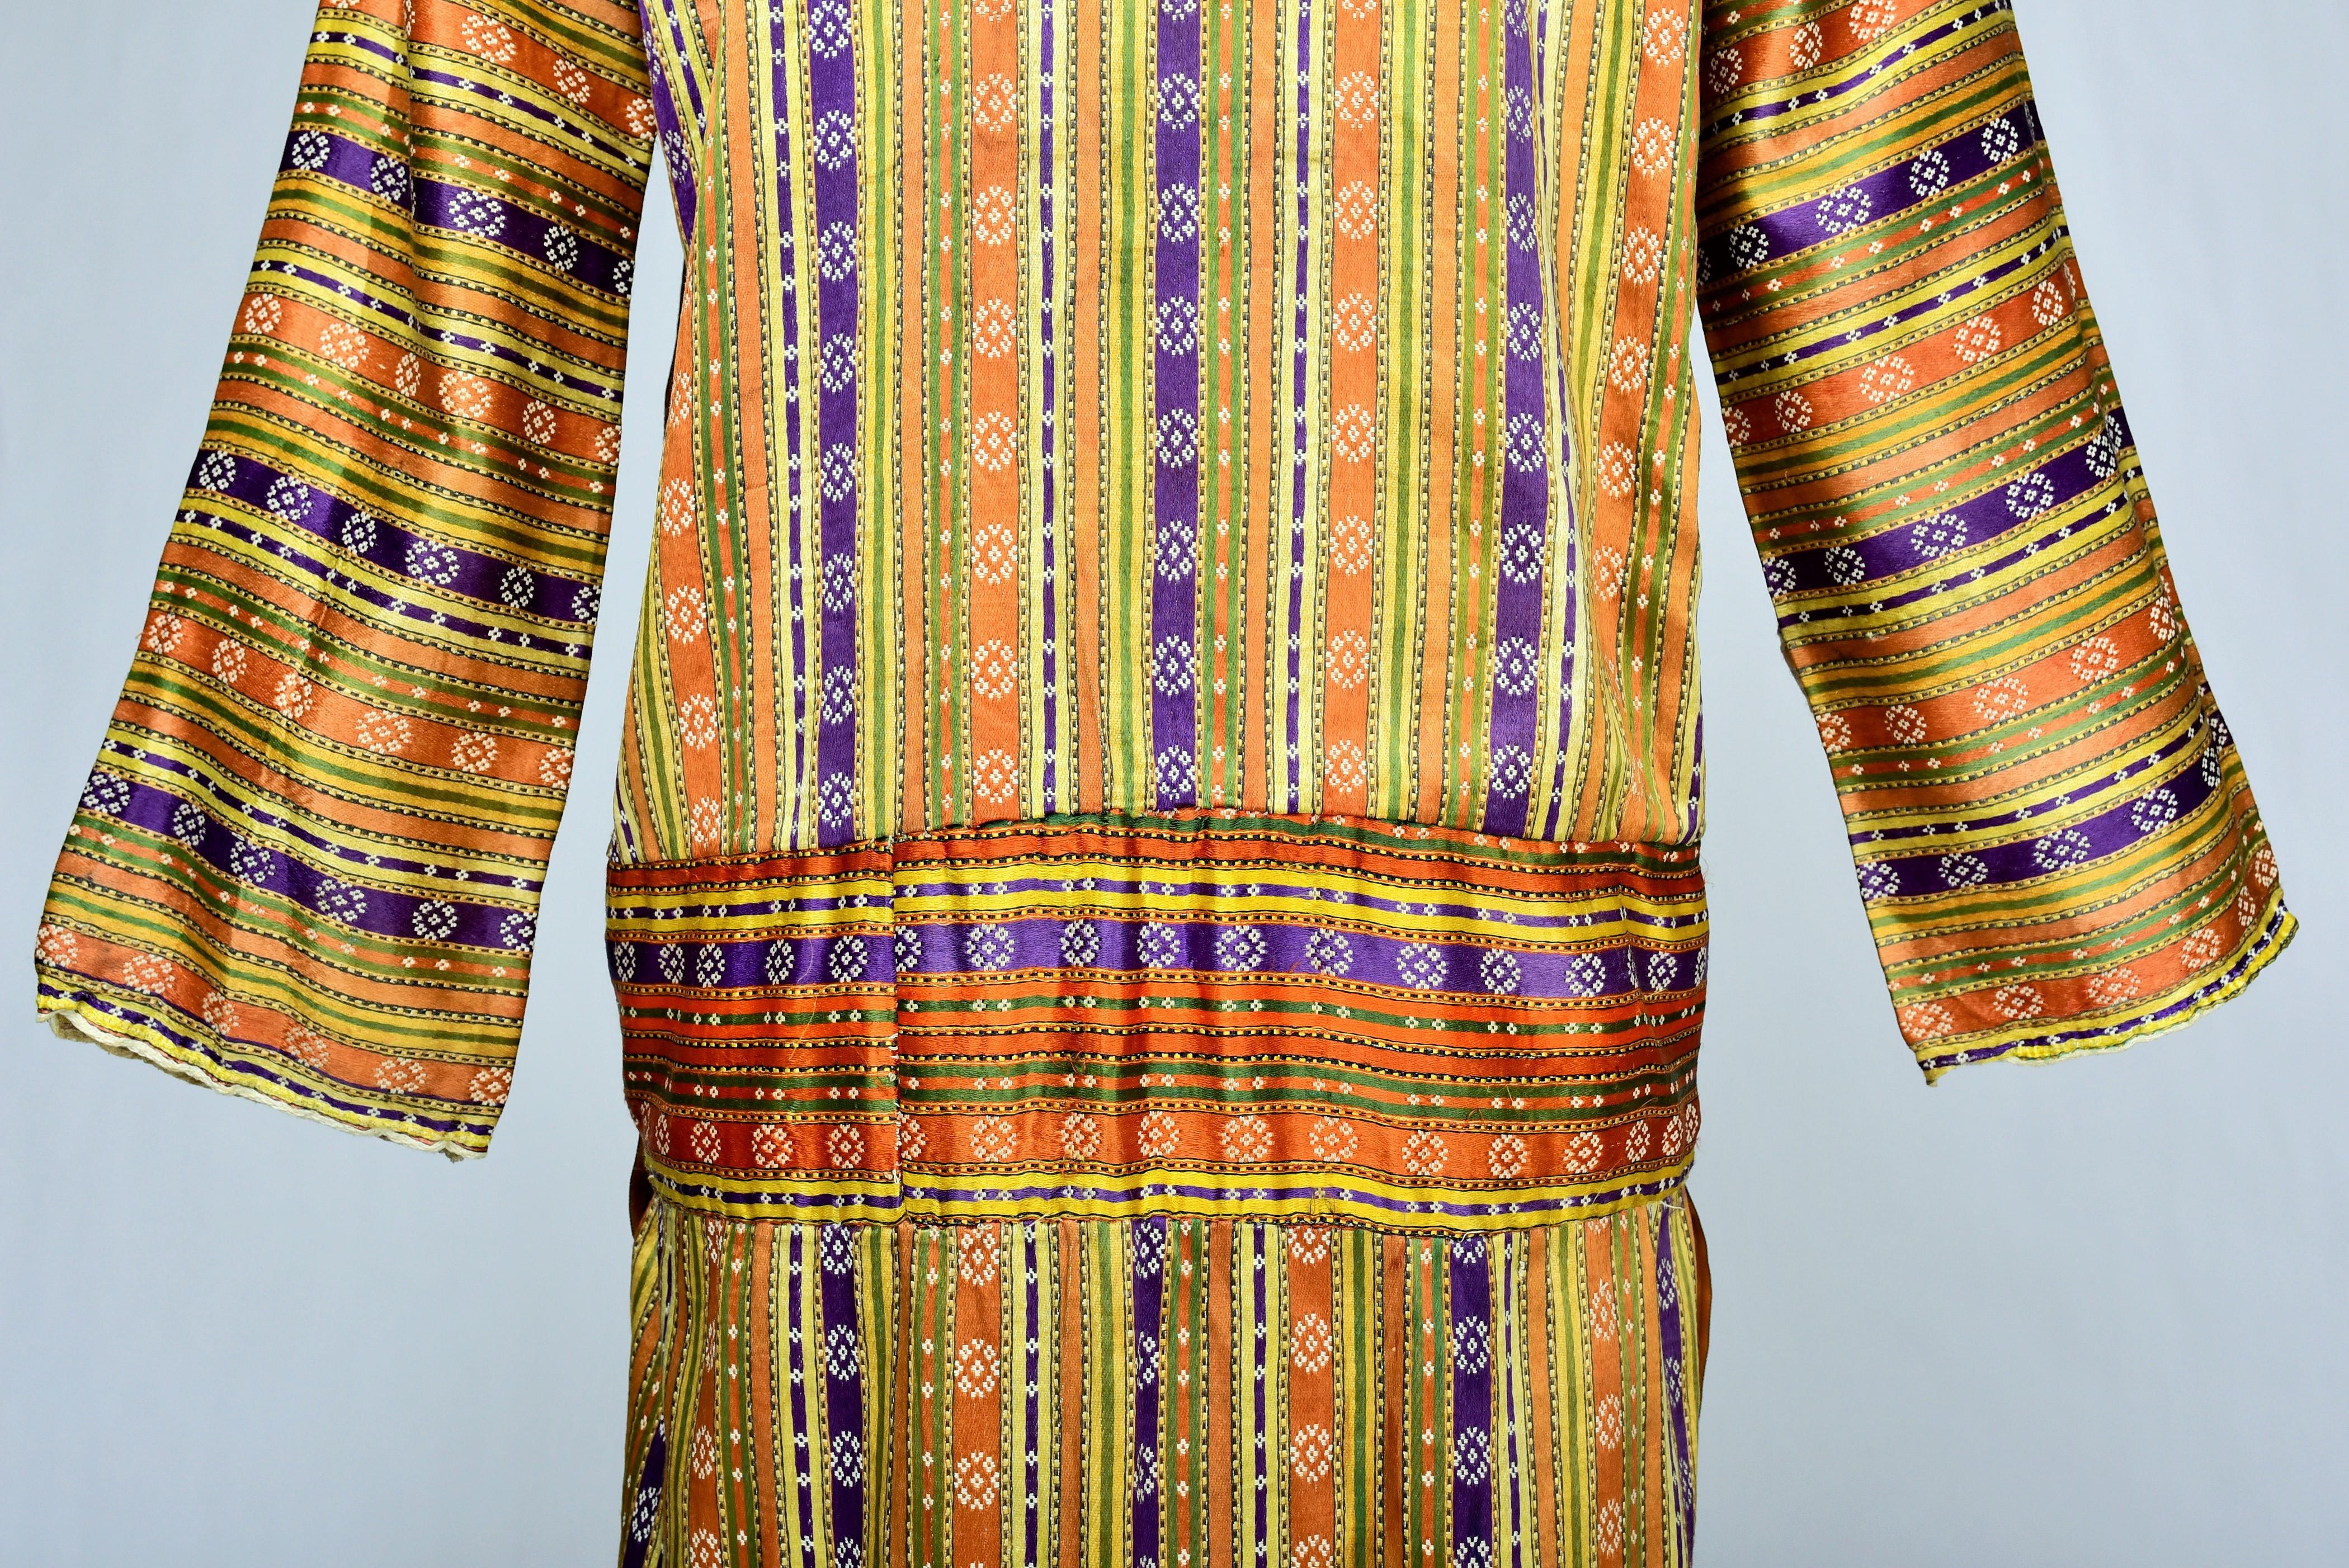 A Satin Striped Kaftan - Ottoman Empire Circa 1900 - 1920 For Sale 6